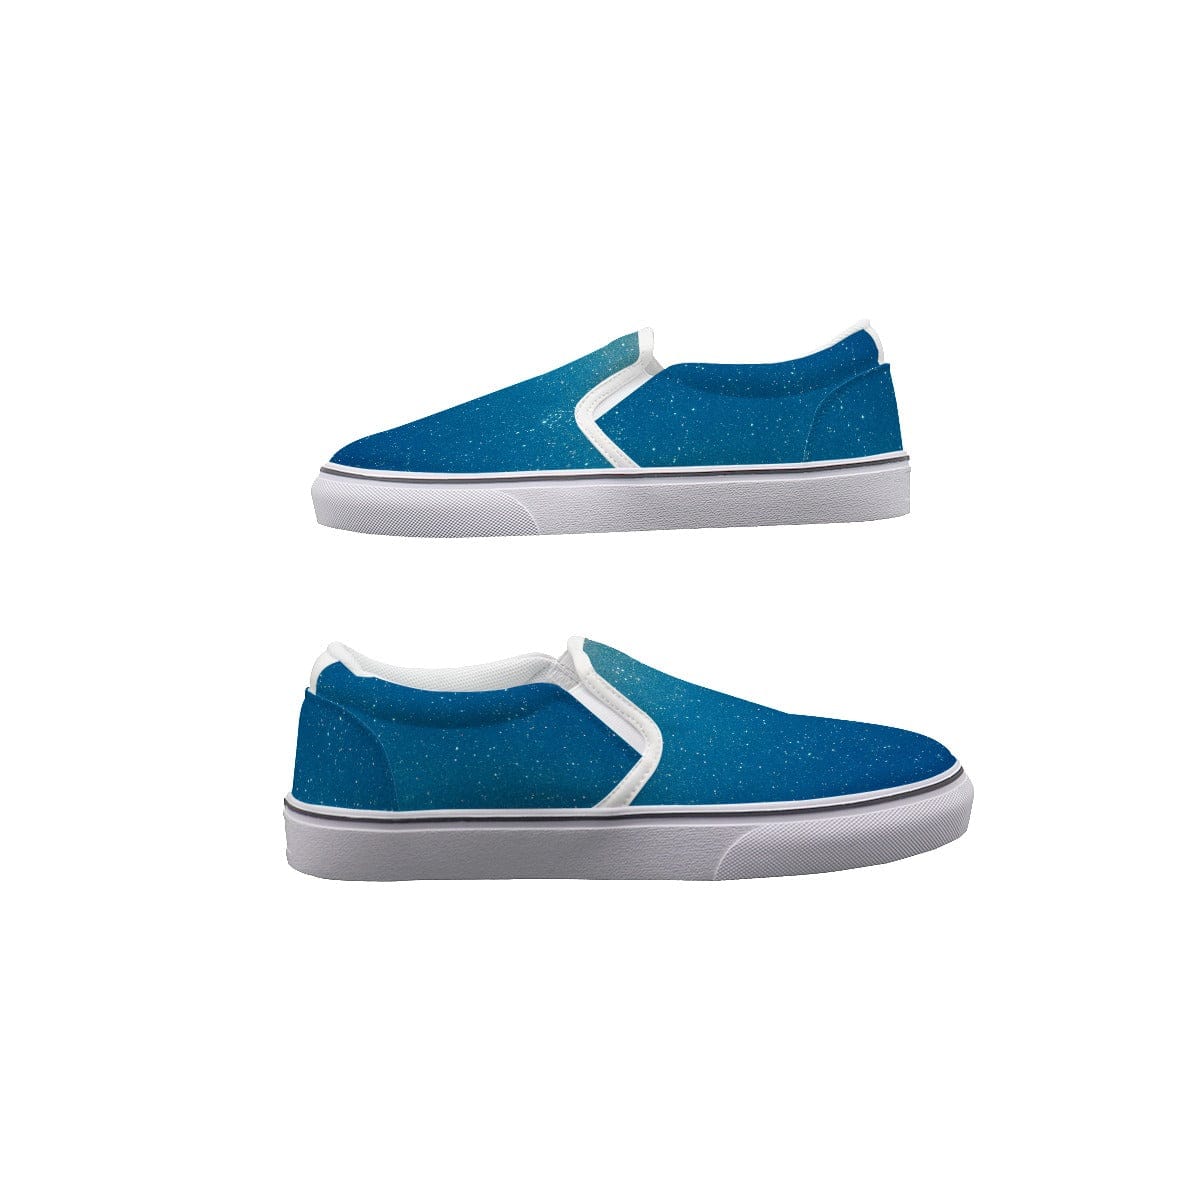 Yoycol Stardust Blue Cruisers - Women's Slip On Sneakers